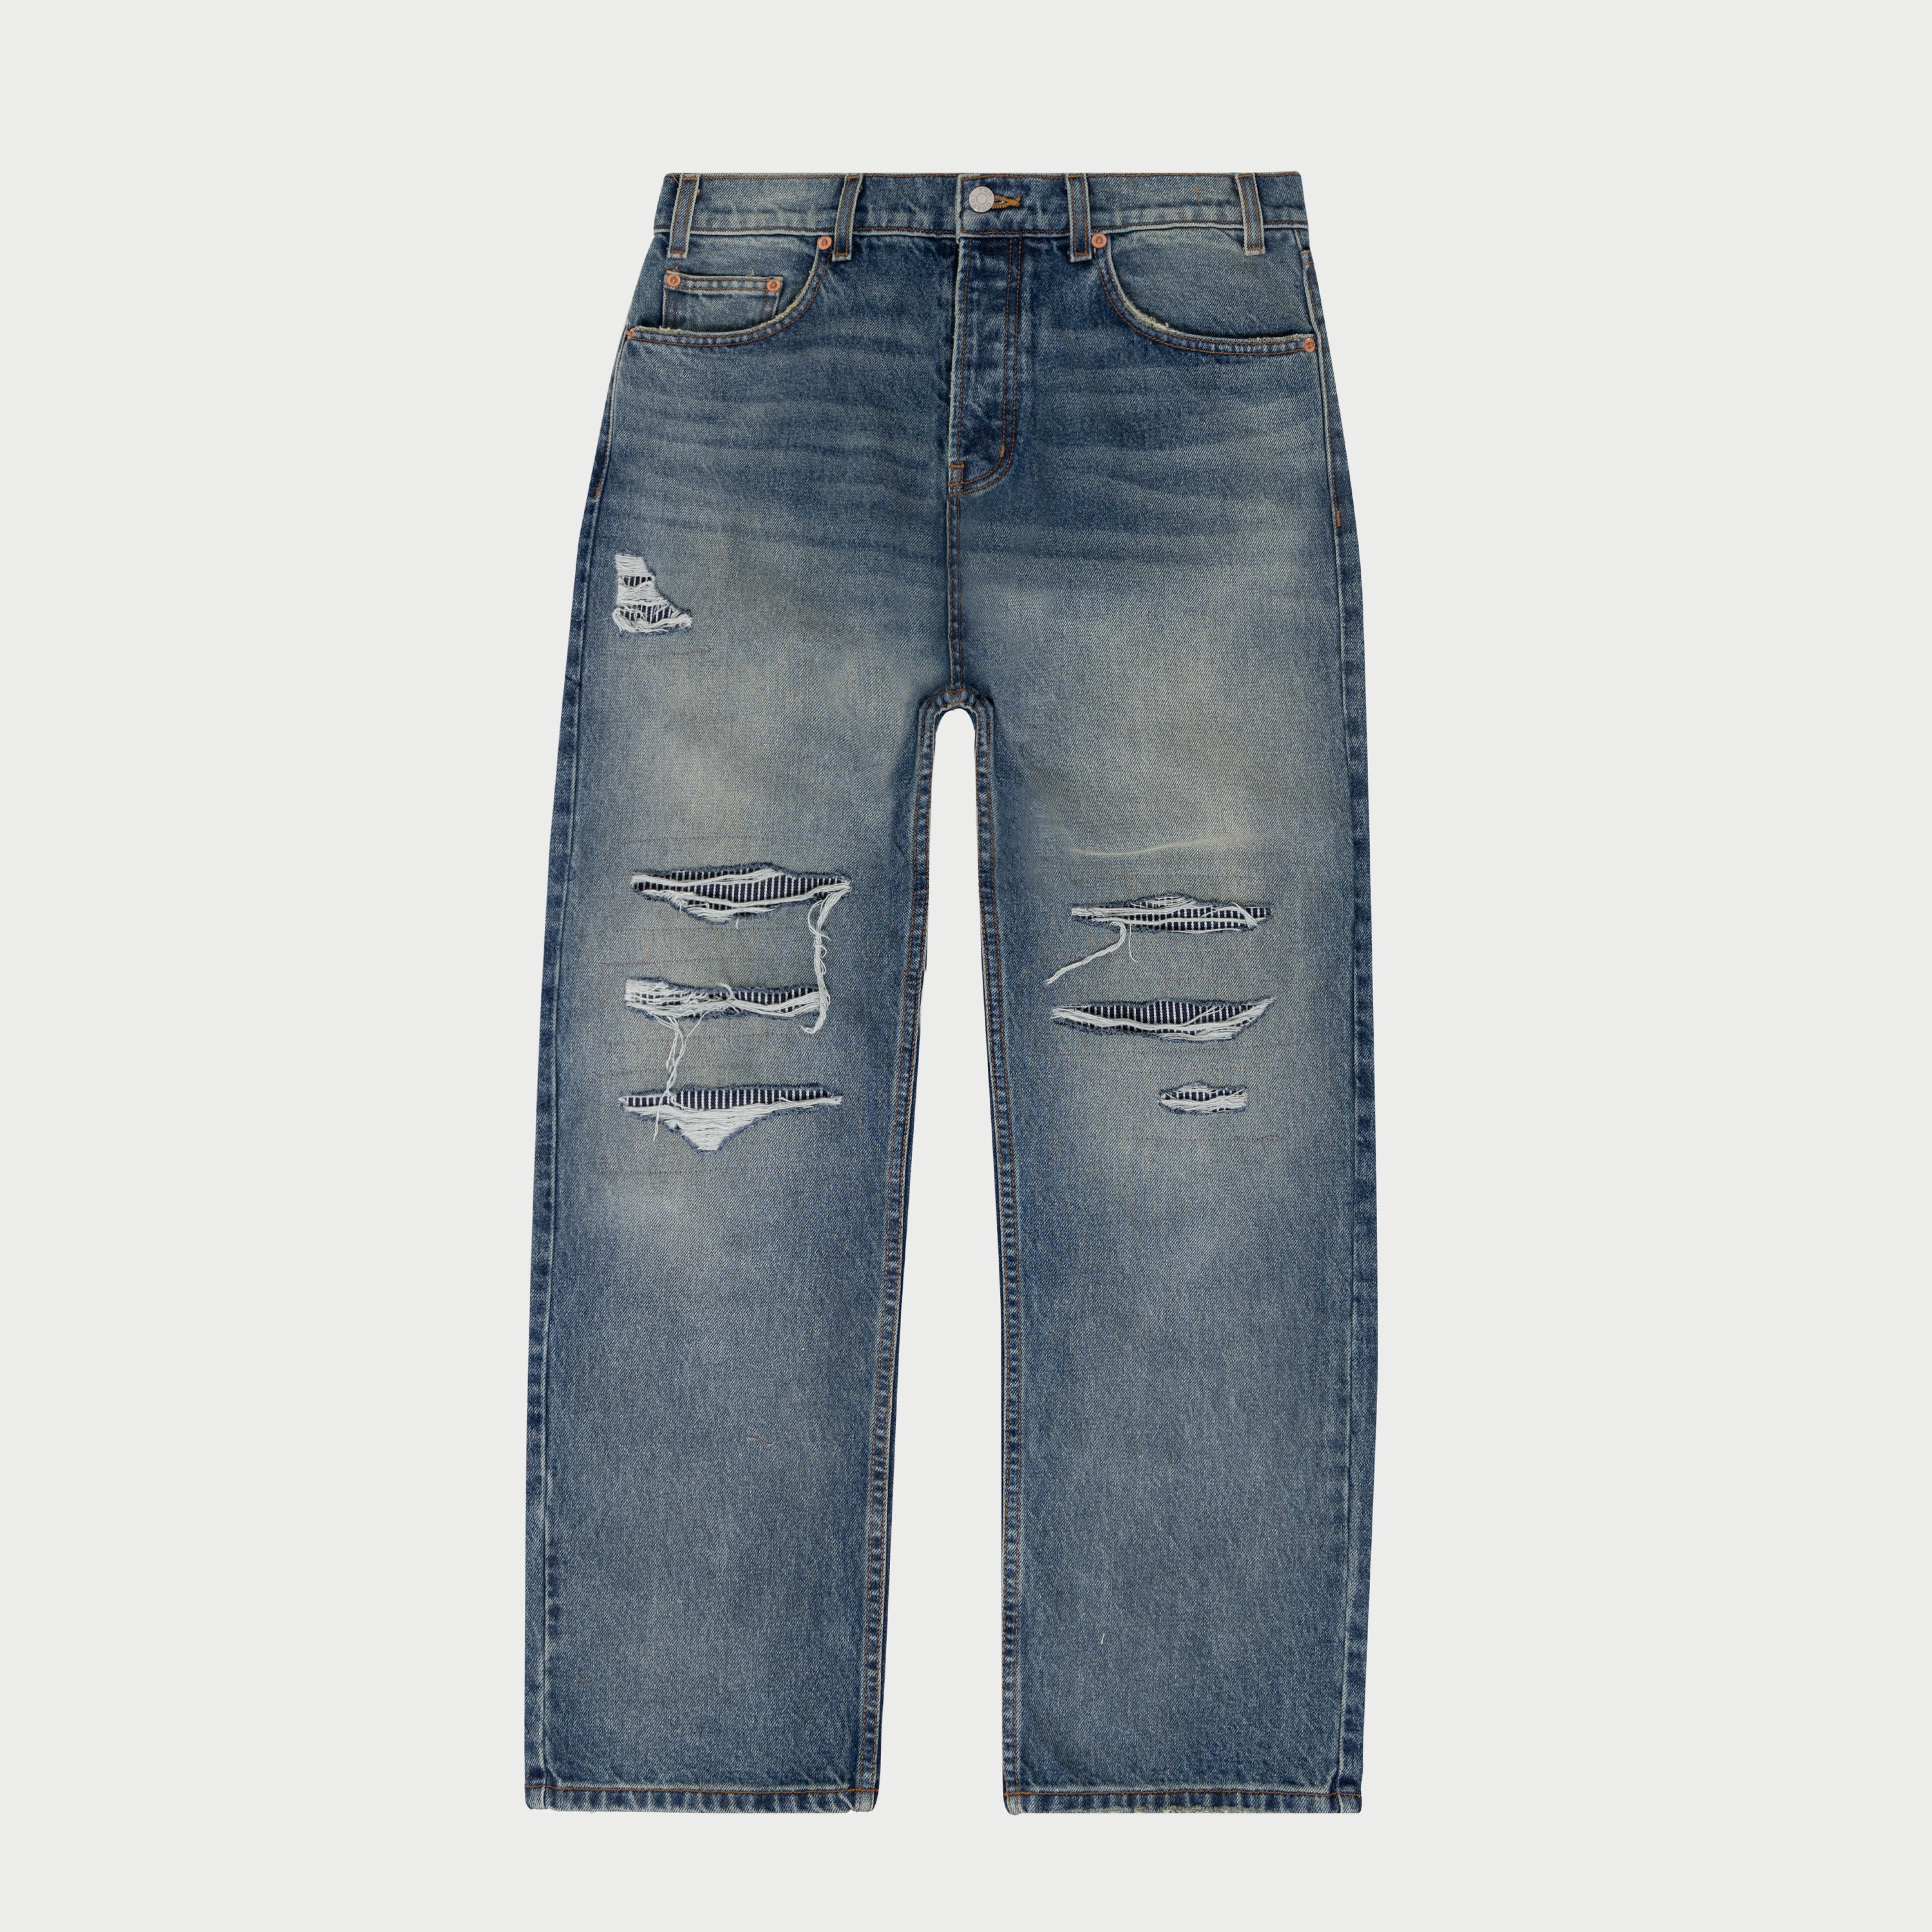 CASH + CA NEIGHBORHOOD 5-POCKET Jeans M素人の採寸ですので若干の誤差は